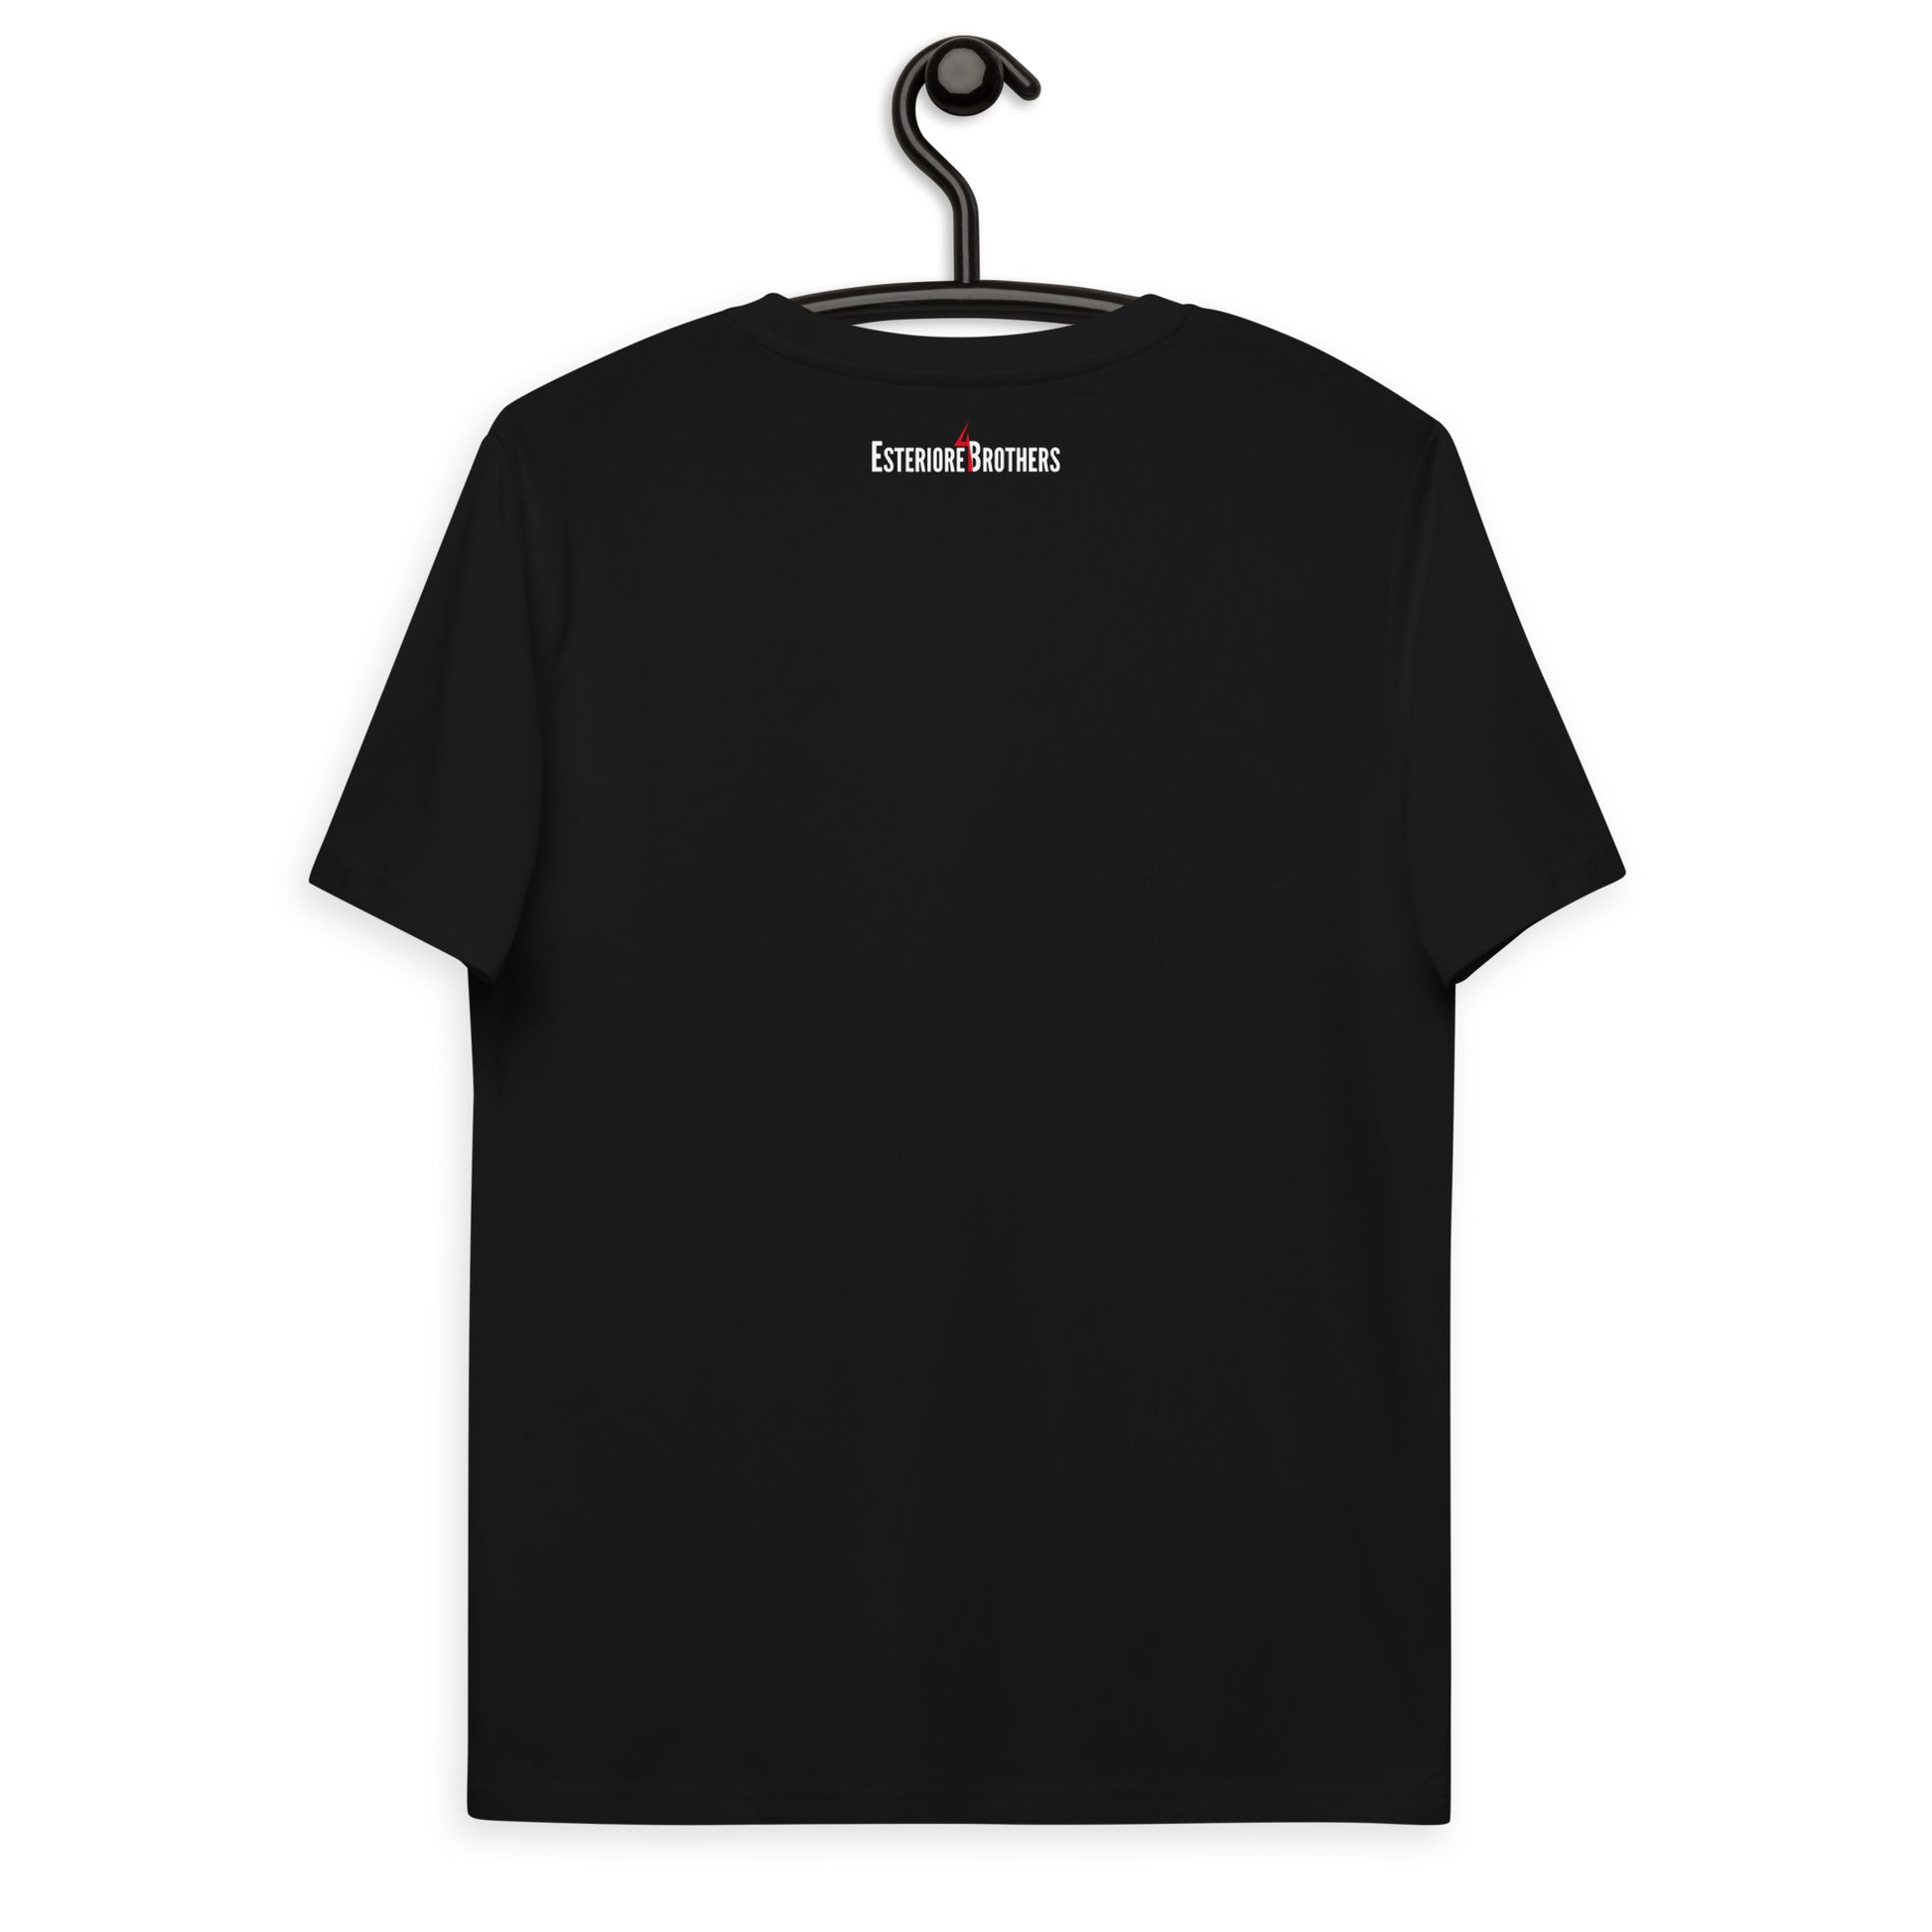 SARÀ PERCHÉ TI AMO! T-Shirt v.2 Black – Esteriore Brothers